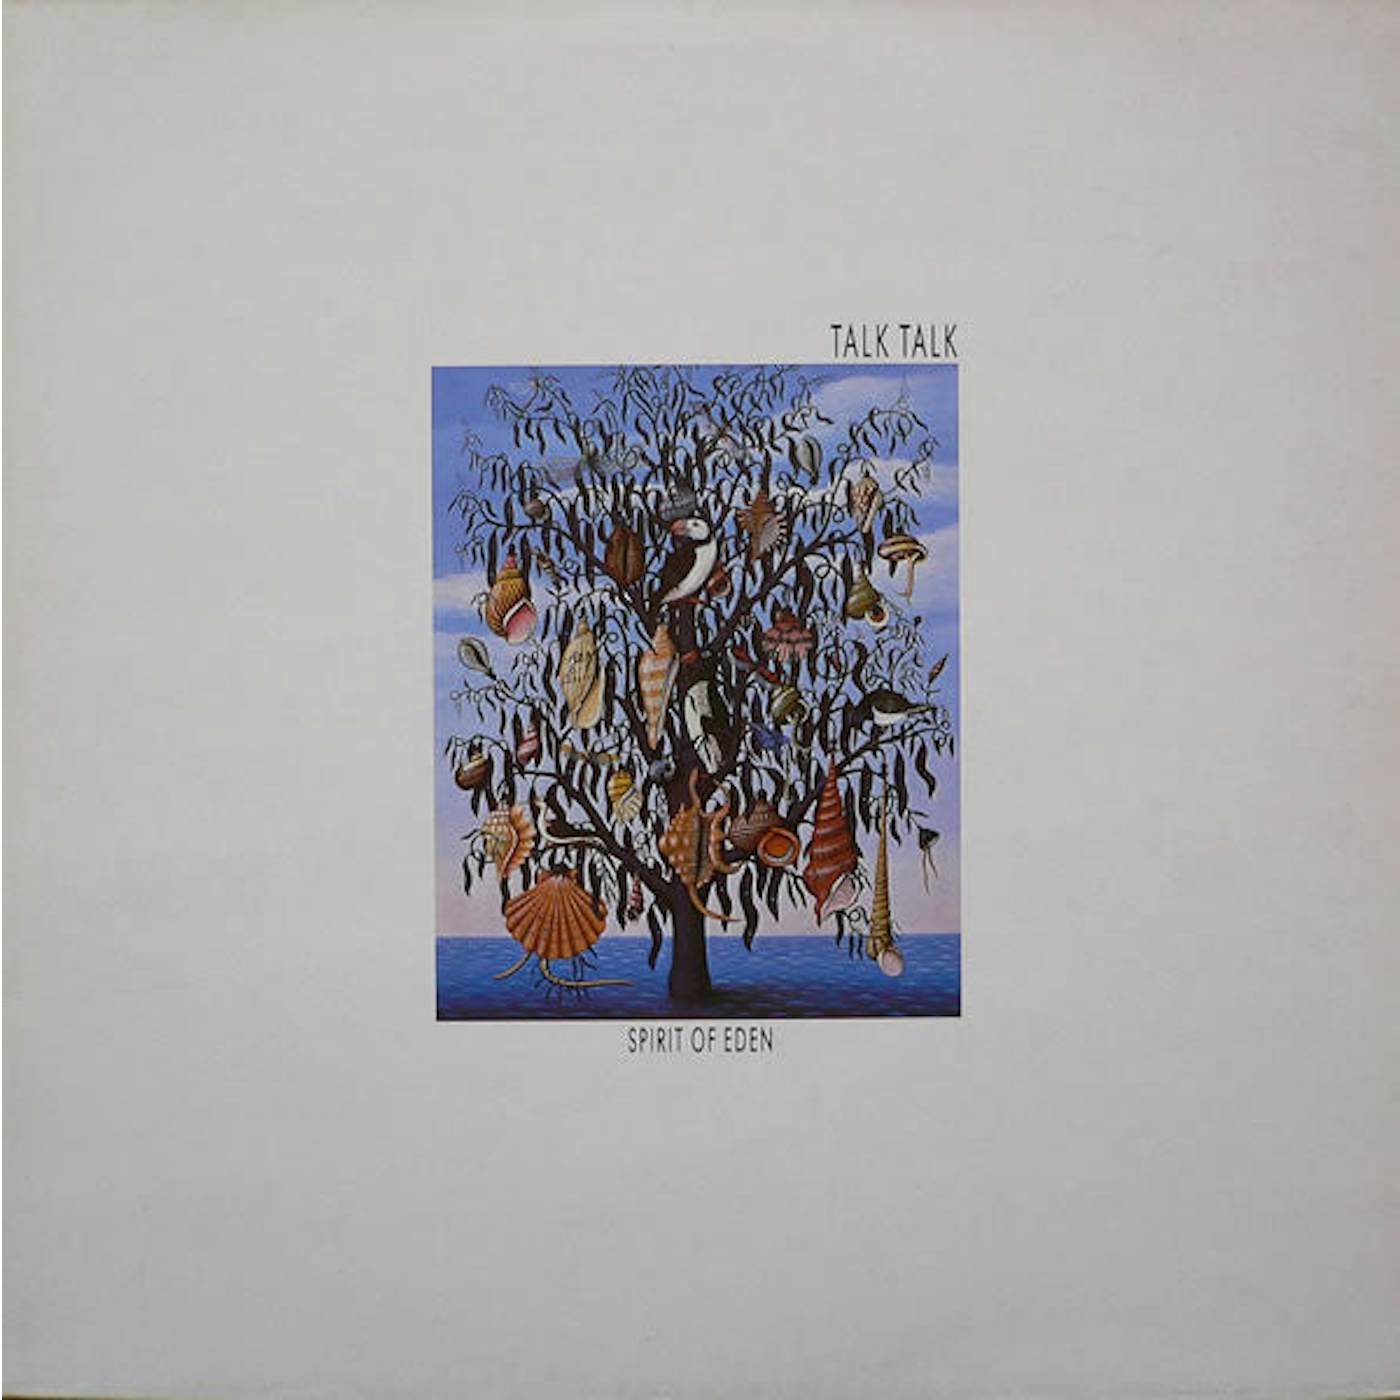 Talk Talk LP Vinyl Record - Spirit Of Eden